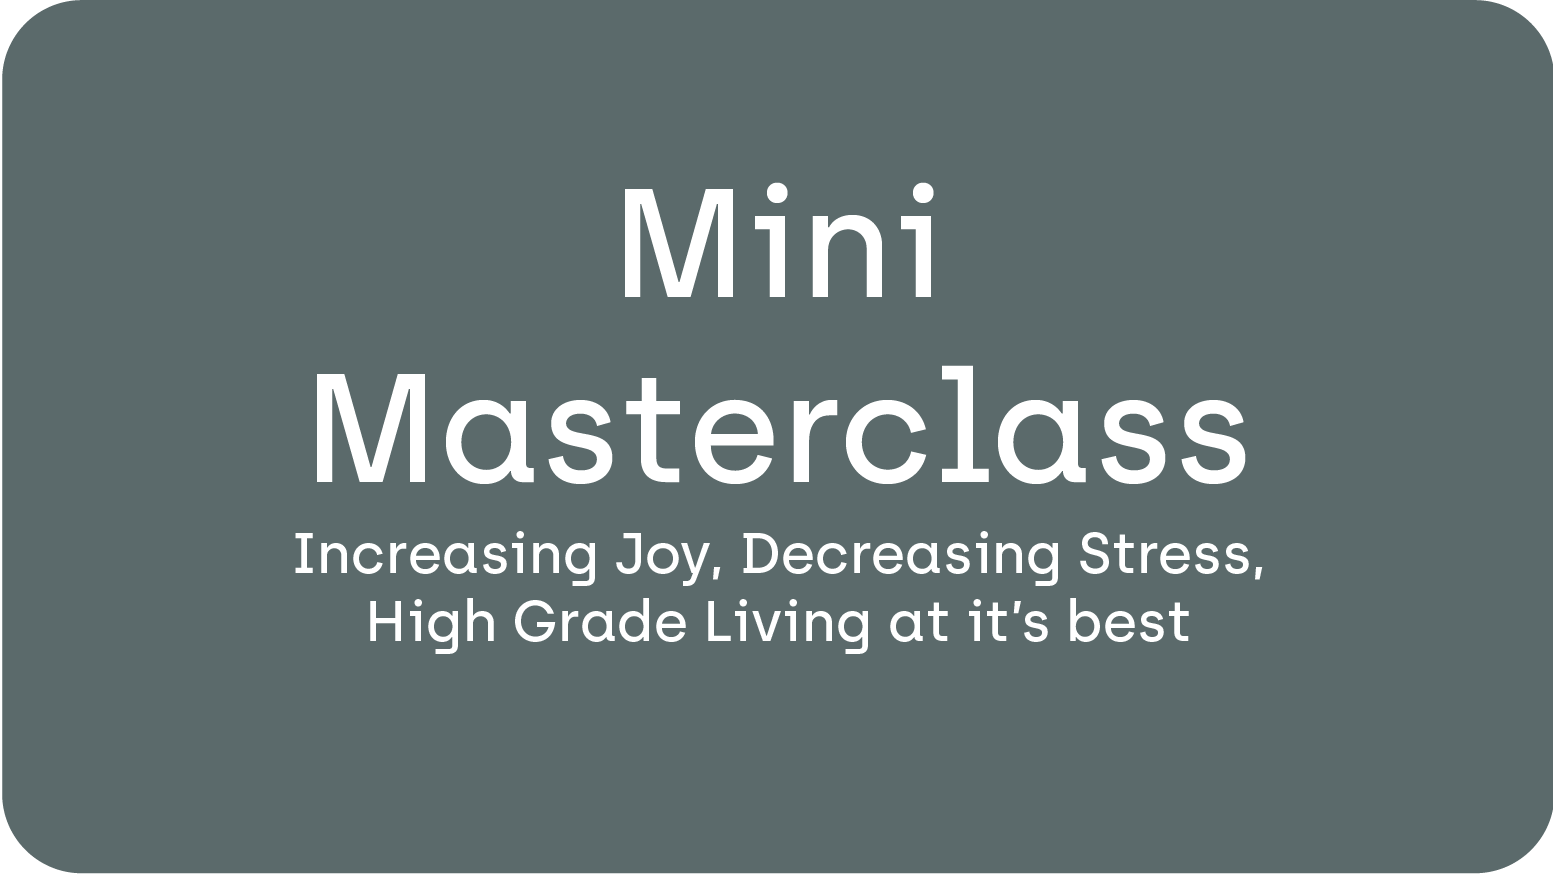 Live Mini Masterclass ‘Mini Masterclass; Increasing Joy, Decreasing Stress, High Grade Living at it’s best’